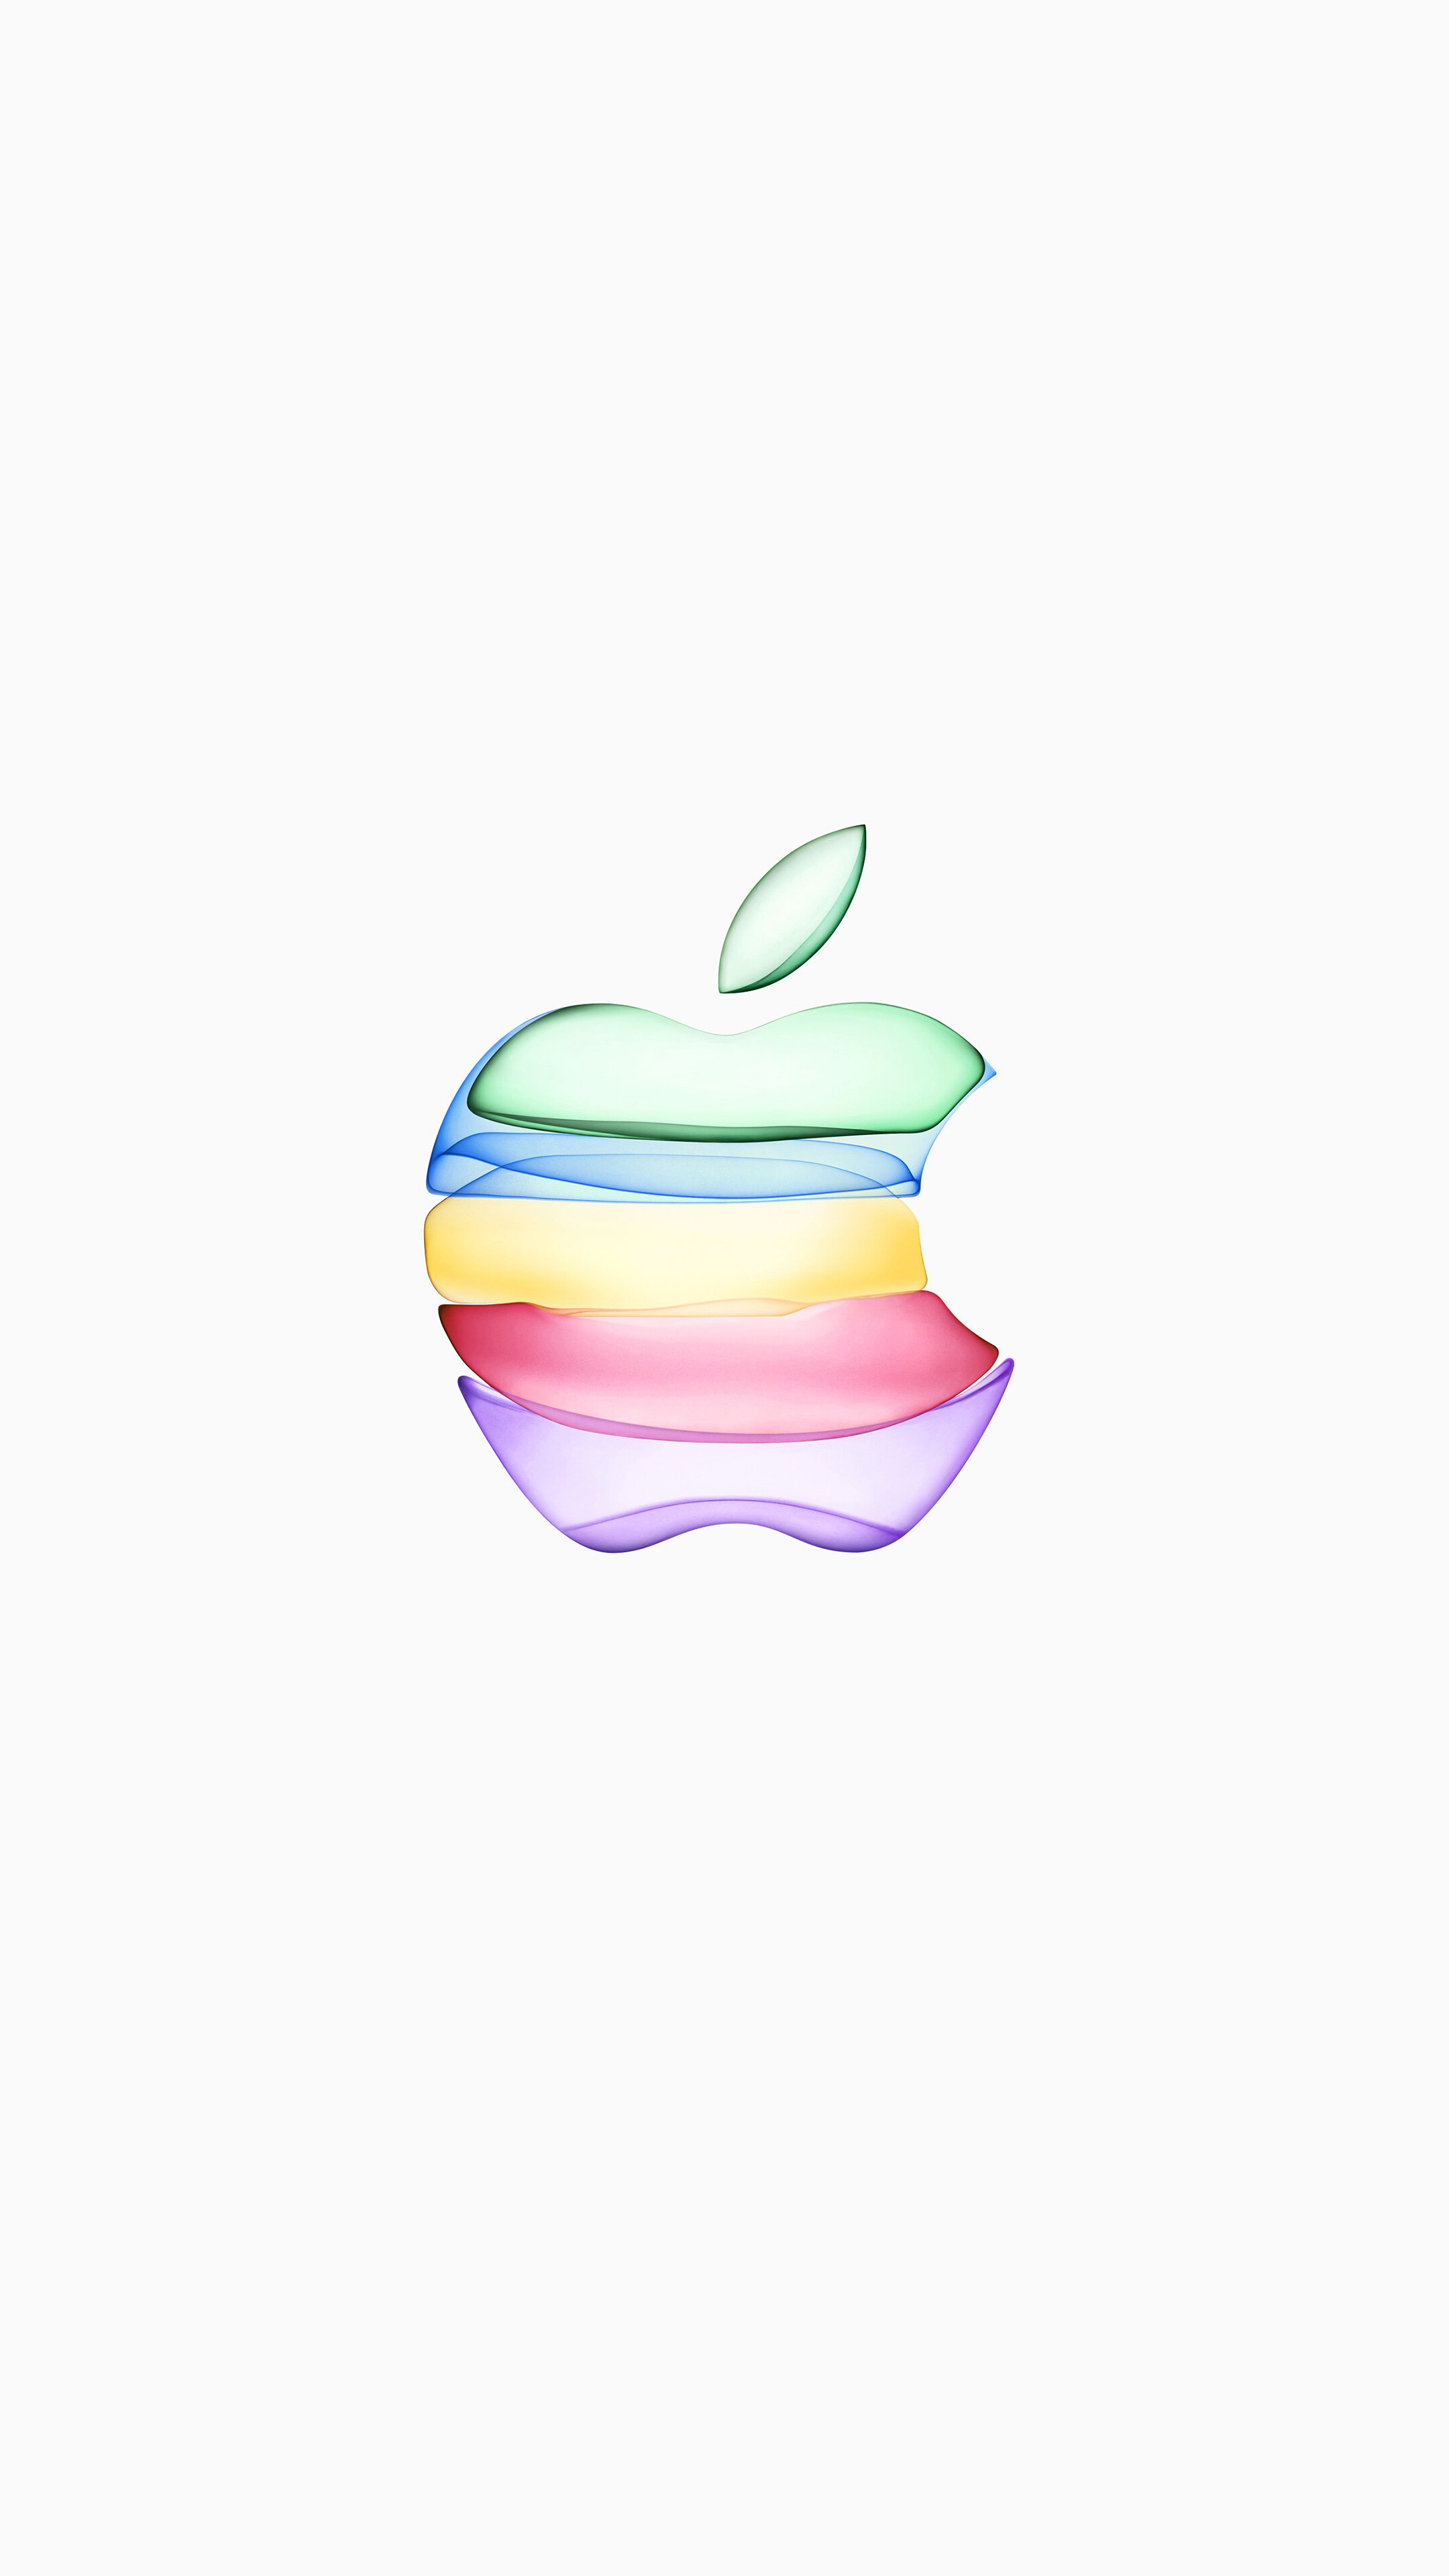 Iphone apple logo hd